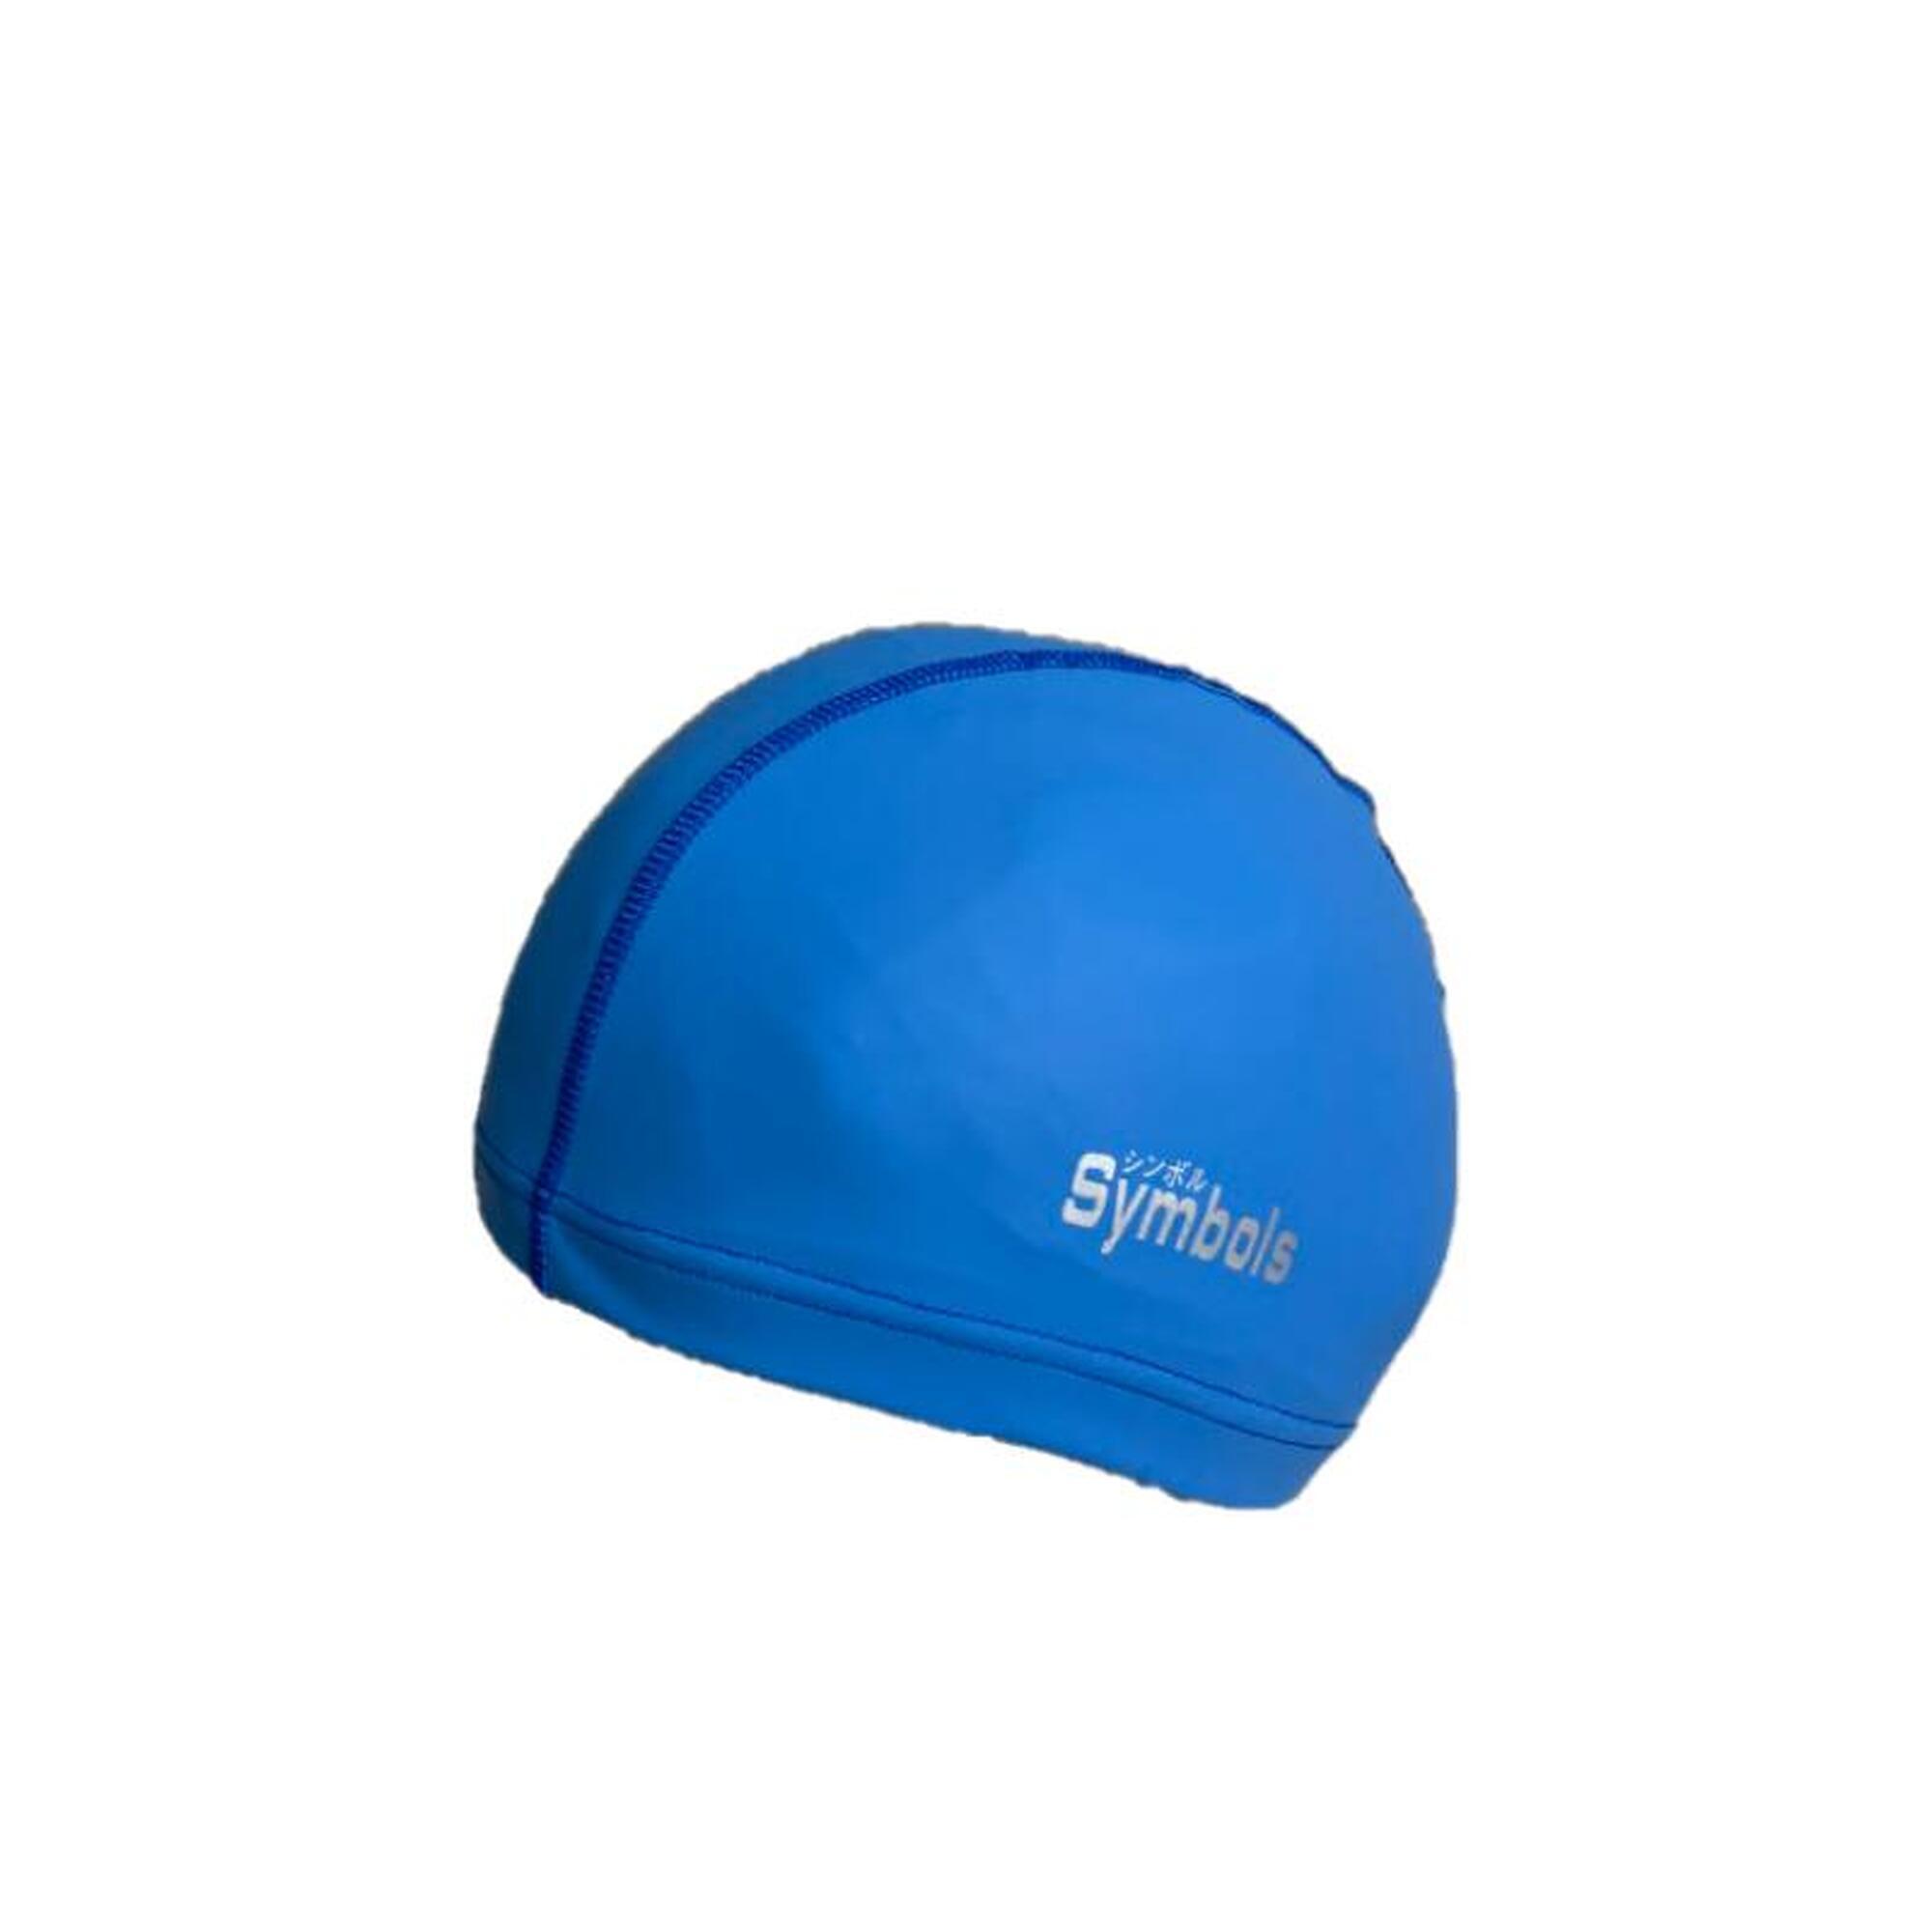 CAP002 Adult PU coated, comfortable Swimming Cap - BLUE